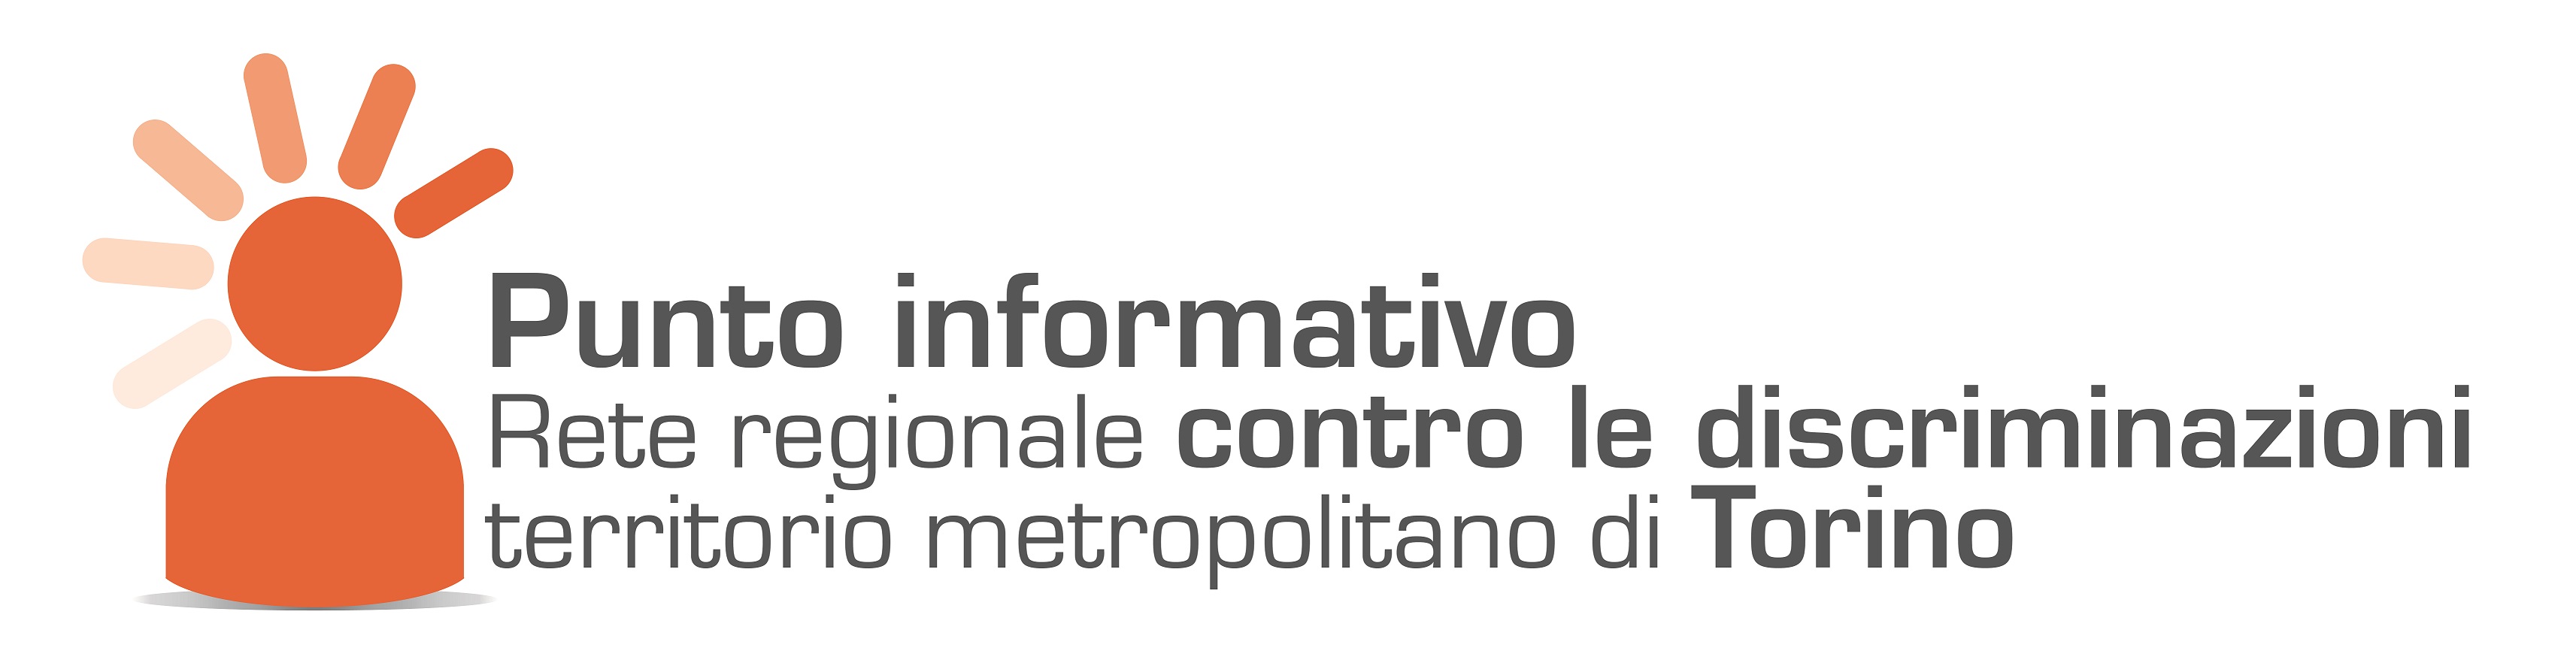 Logo discriminazioni punto informativo Torino Leggero